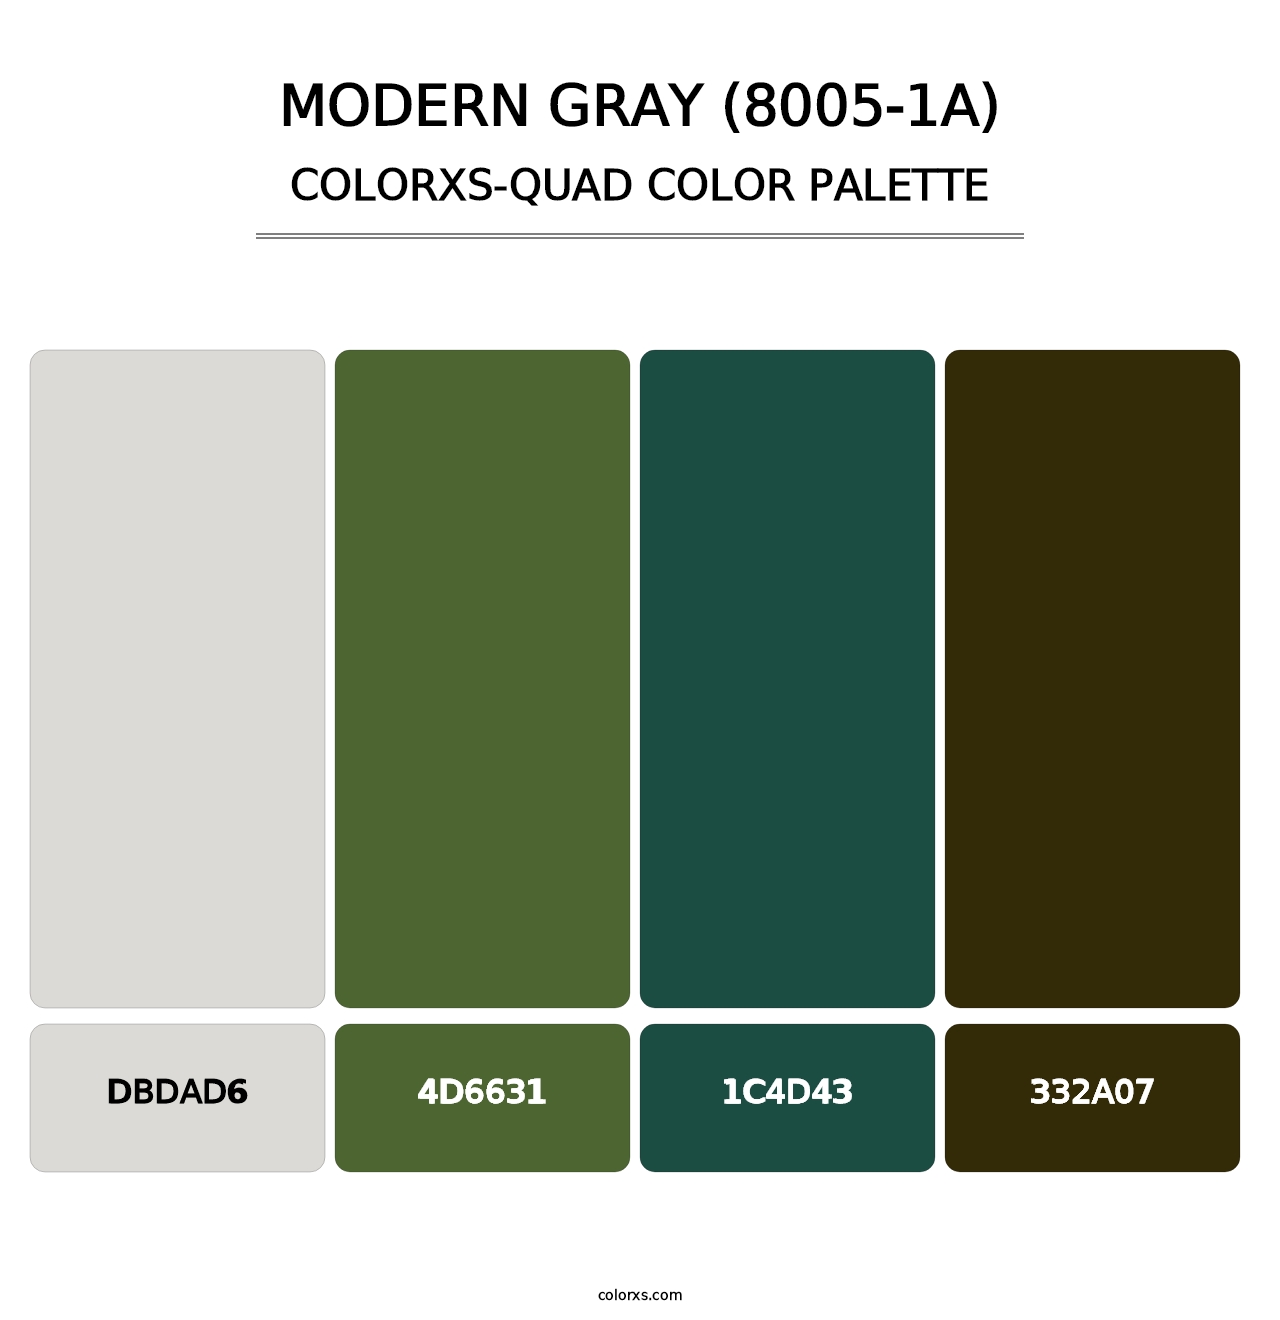 Modern Gray (8005-1A) - Colorxs Quad Palette